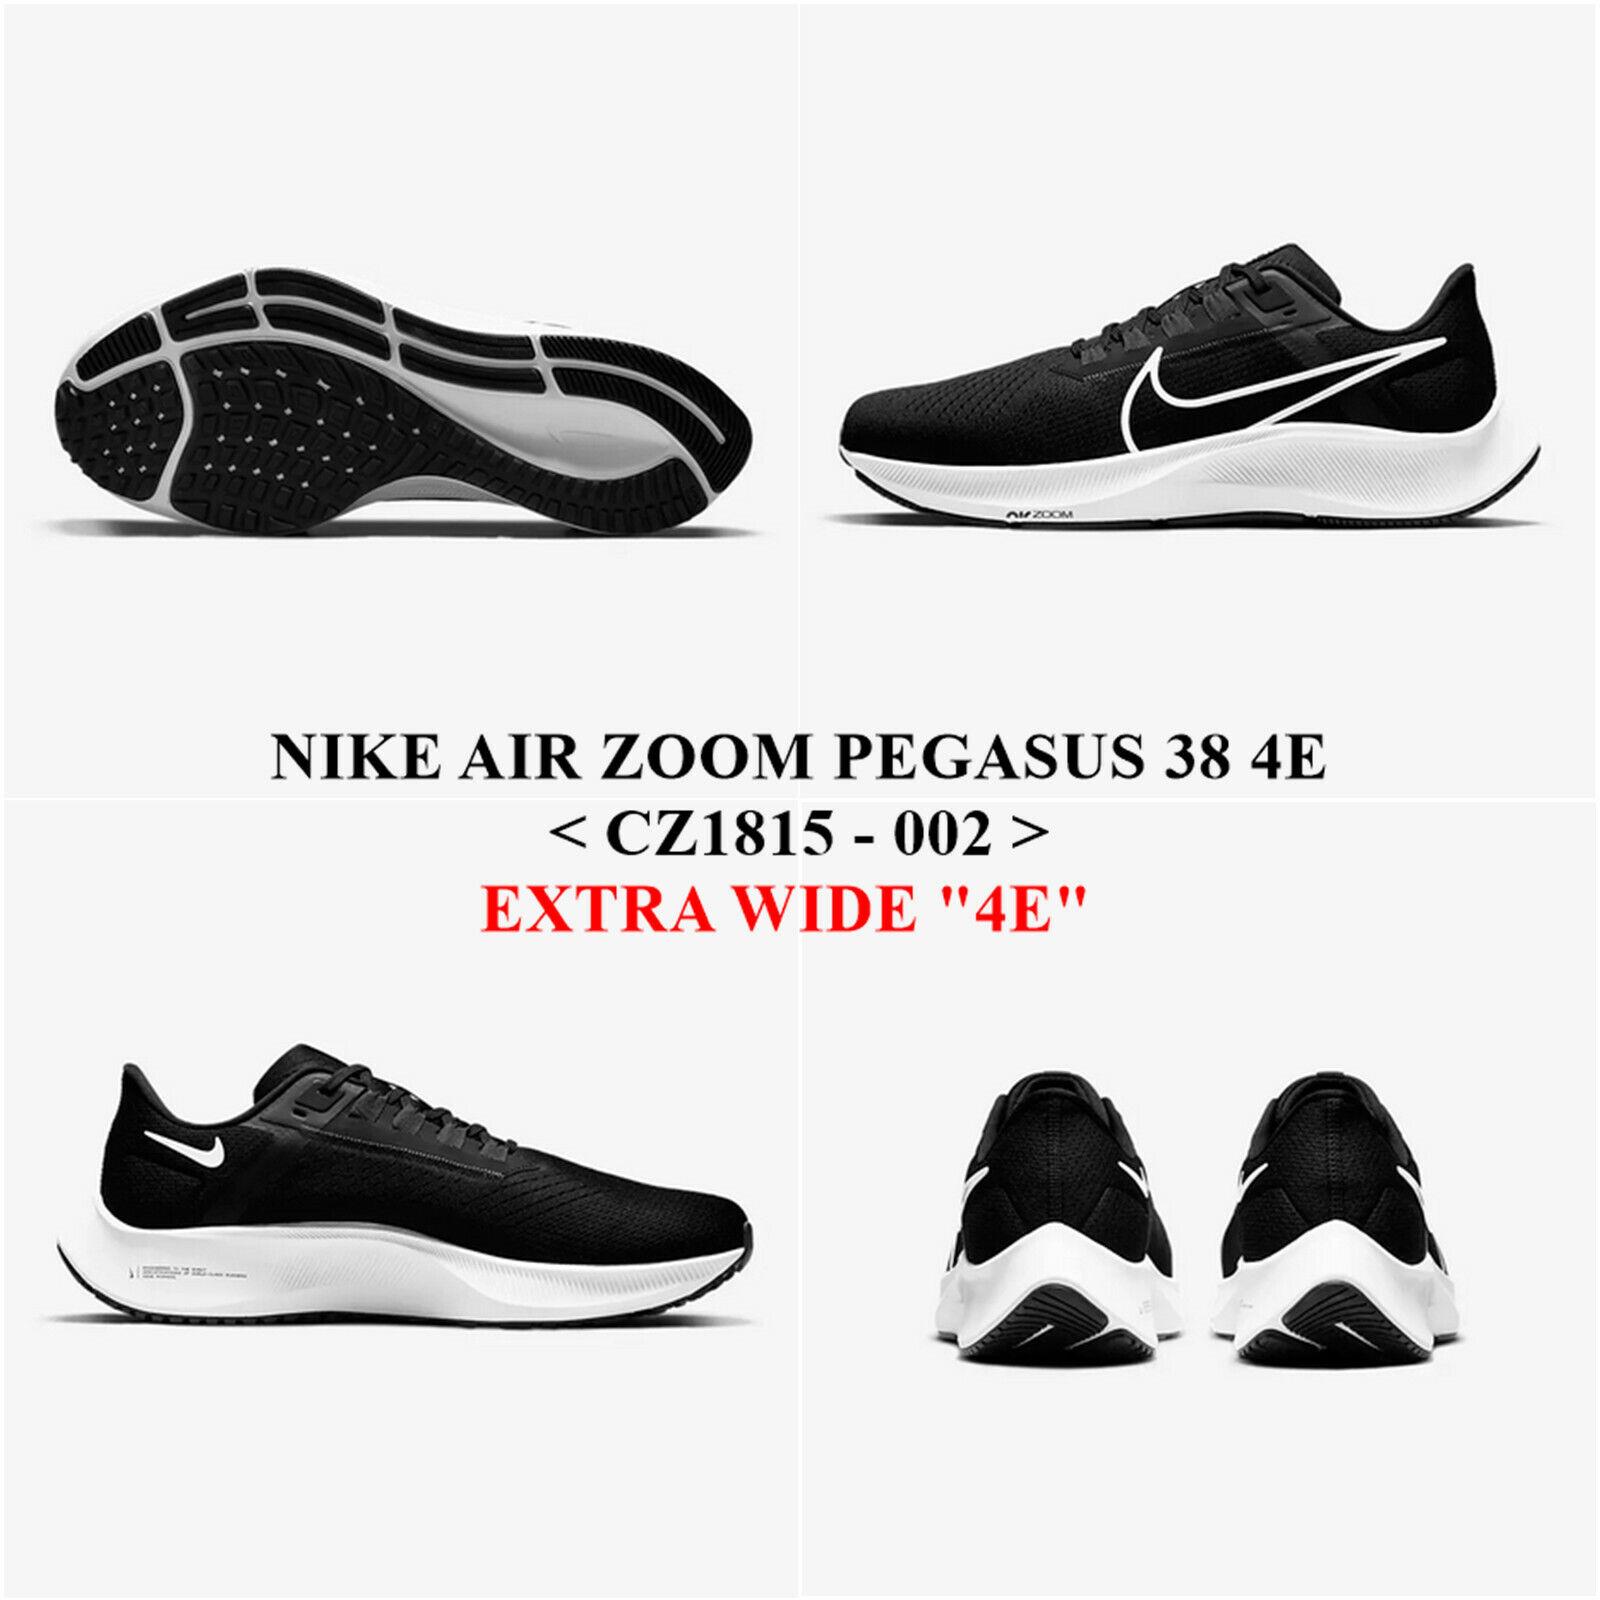 Nike Air Zoom Pegasus 38 4E CZ1815 - 002 .men`s Running Shoes - BLACK/WHITE , BLACK/WHITE-ANTHRACITE-VOLT Manufacturer